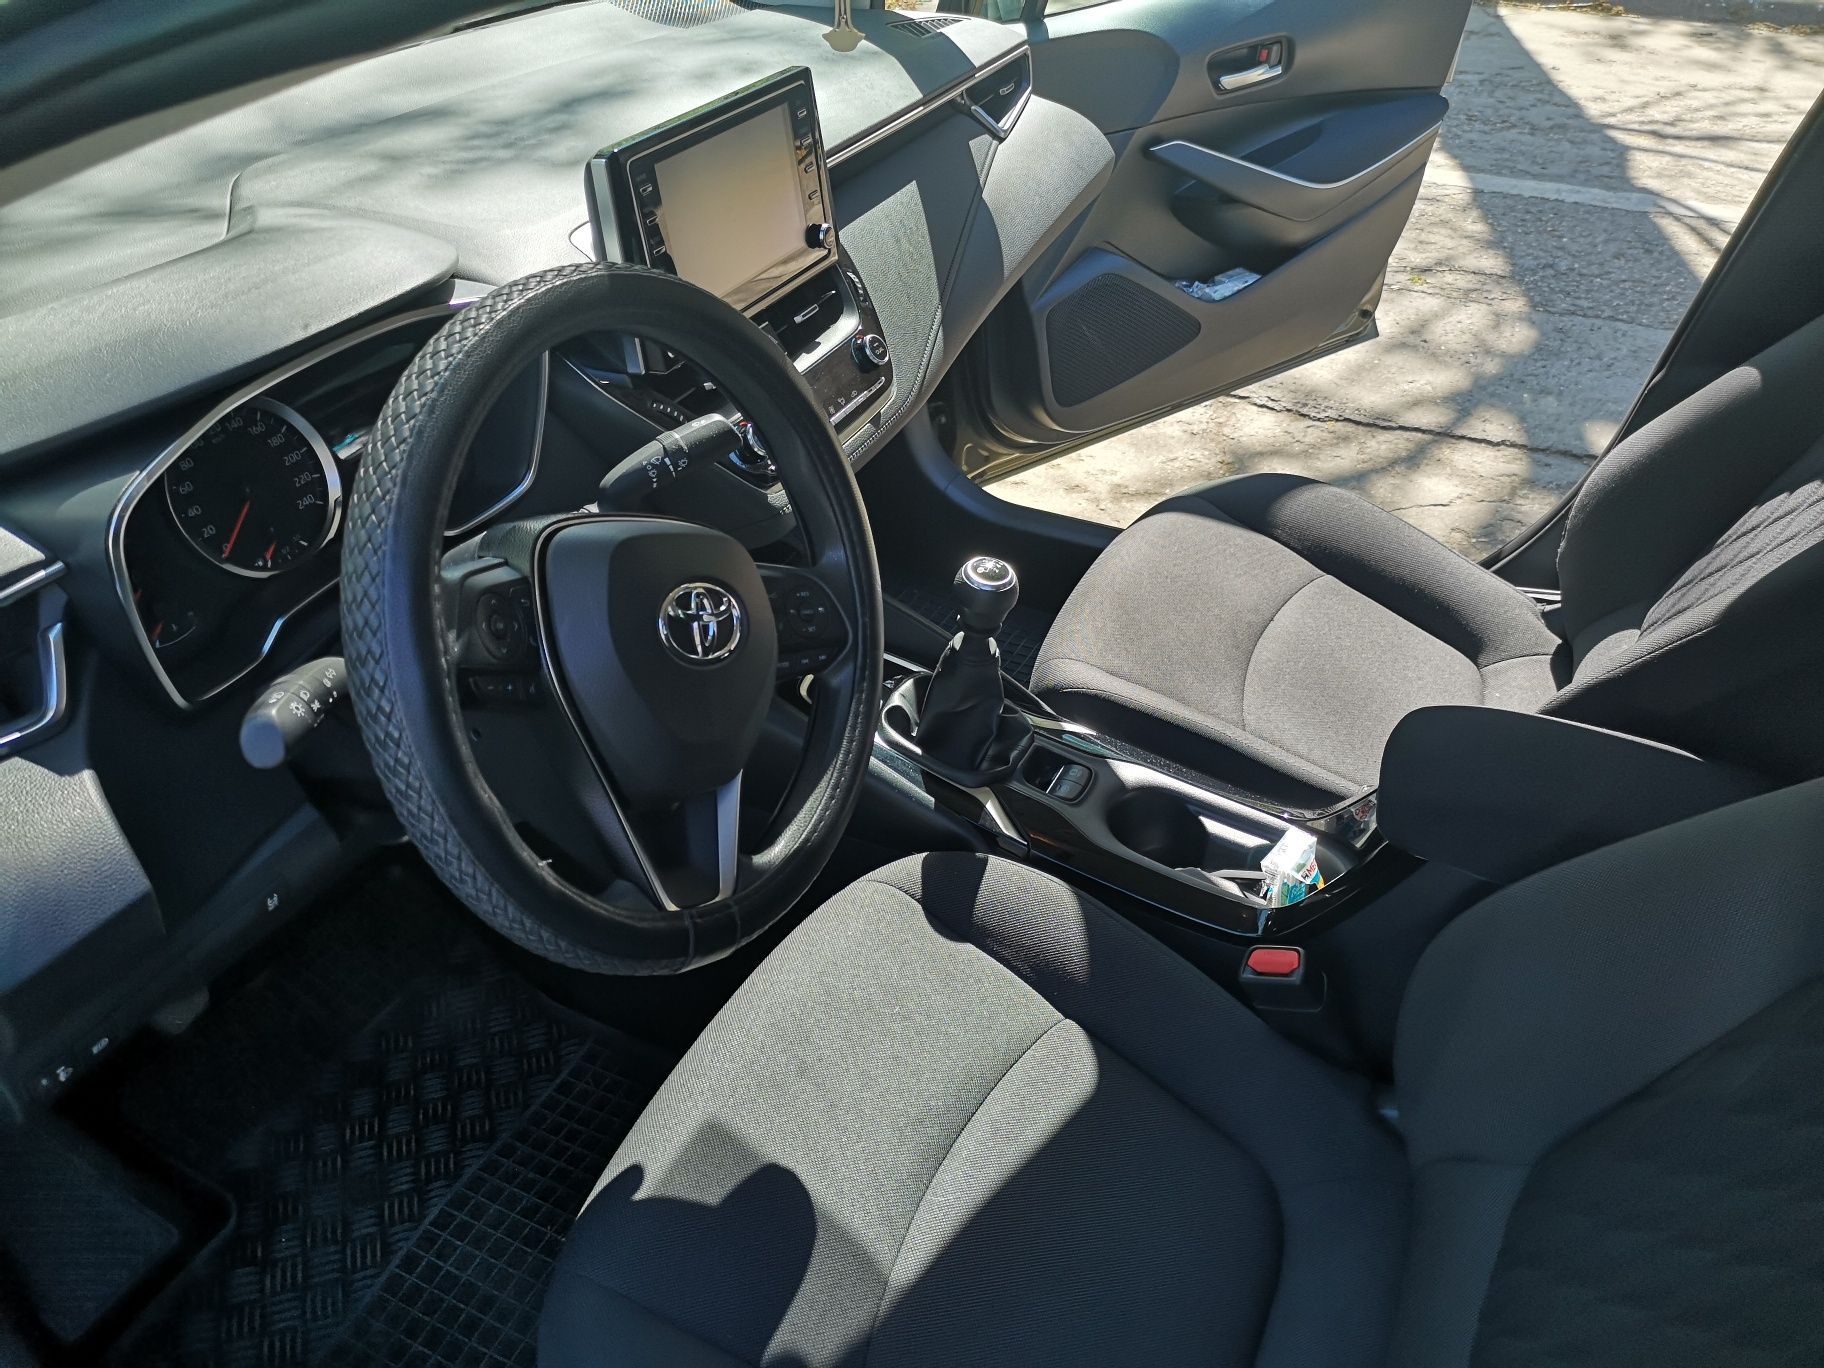 Toyota Corolla 2020 încă în garanție